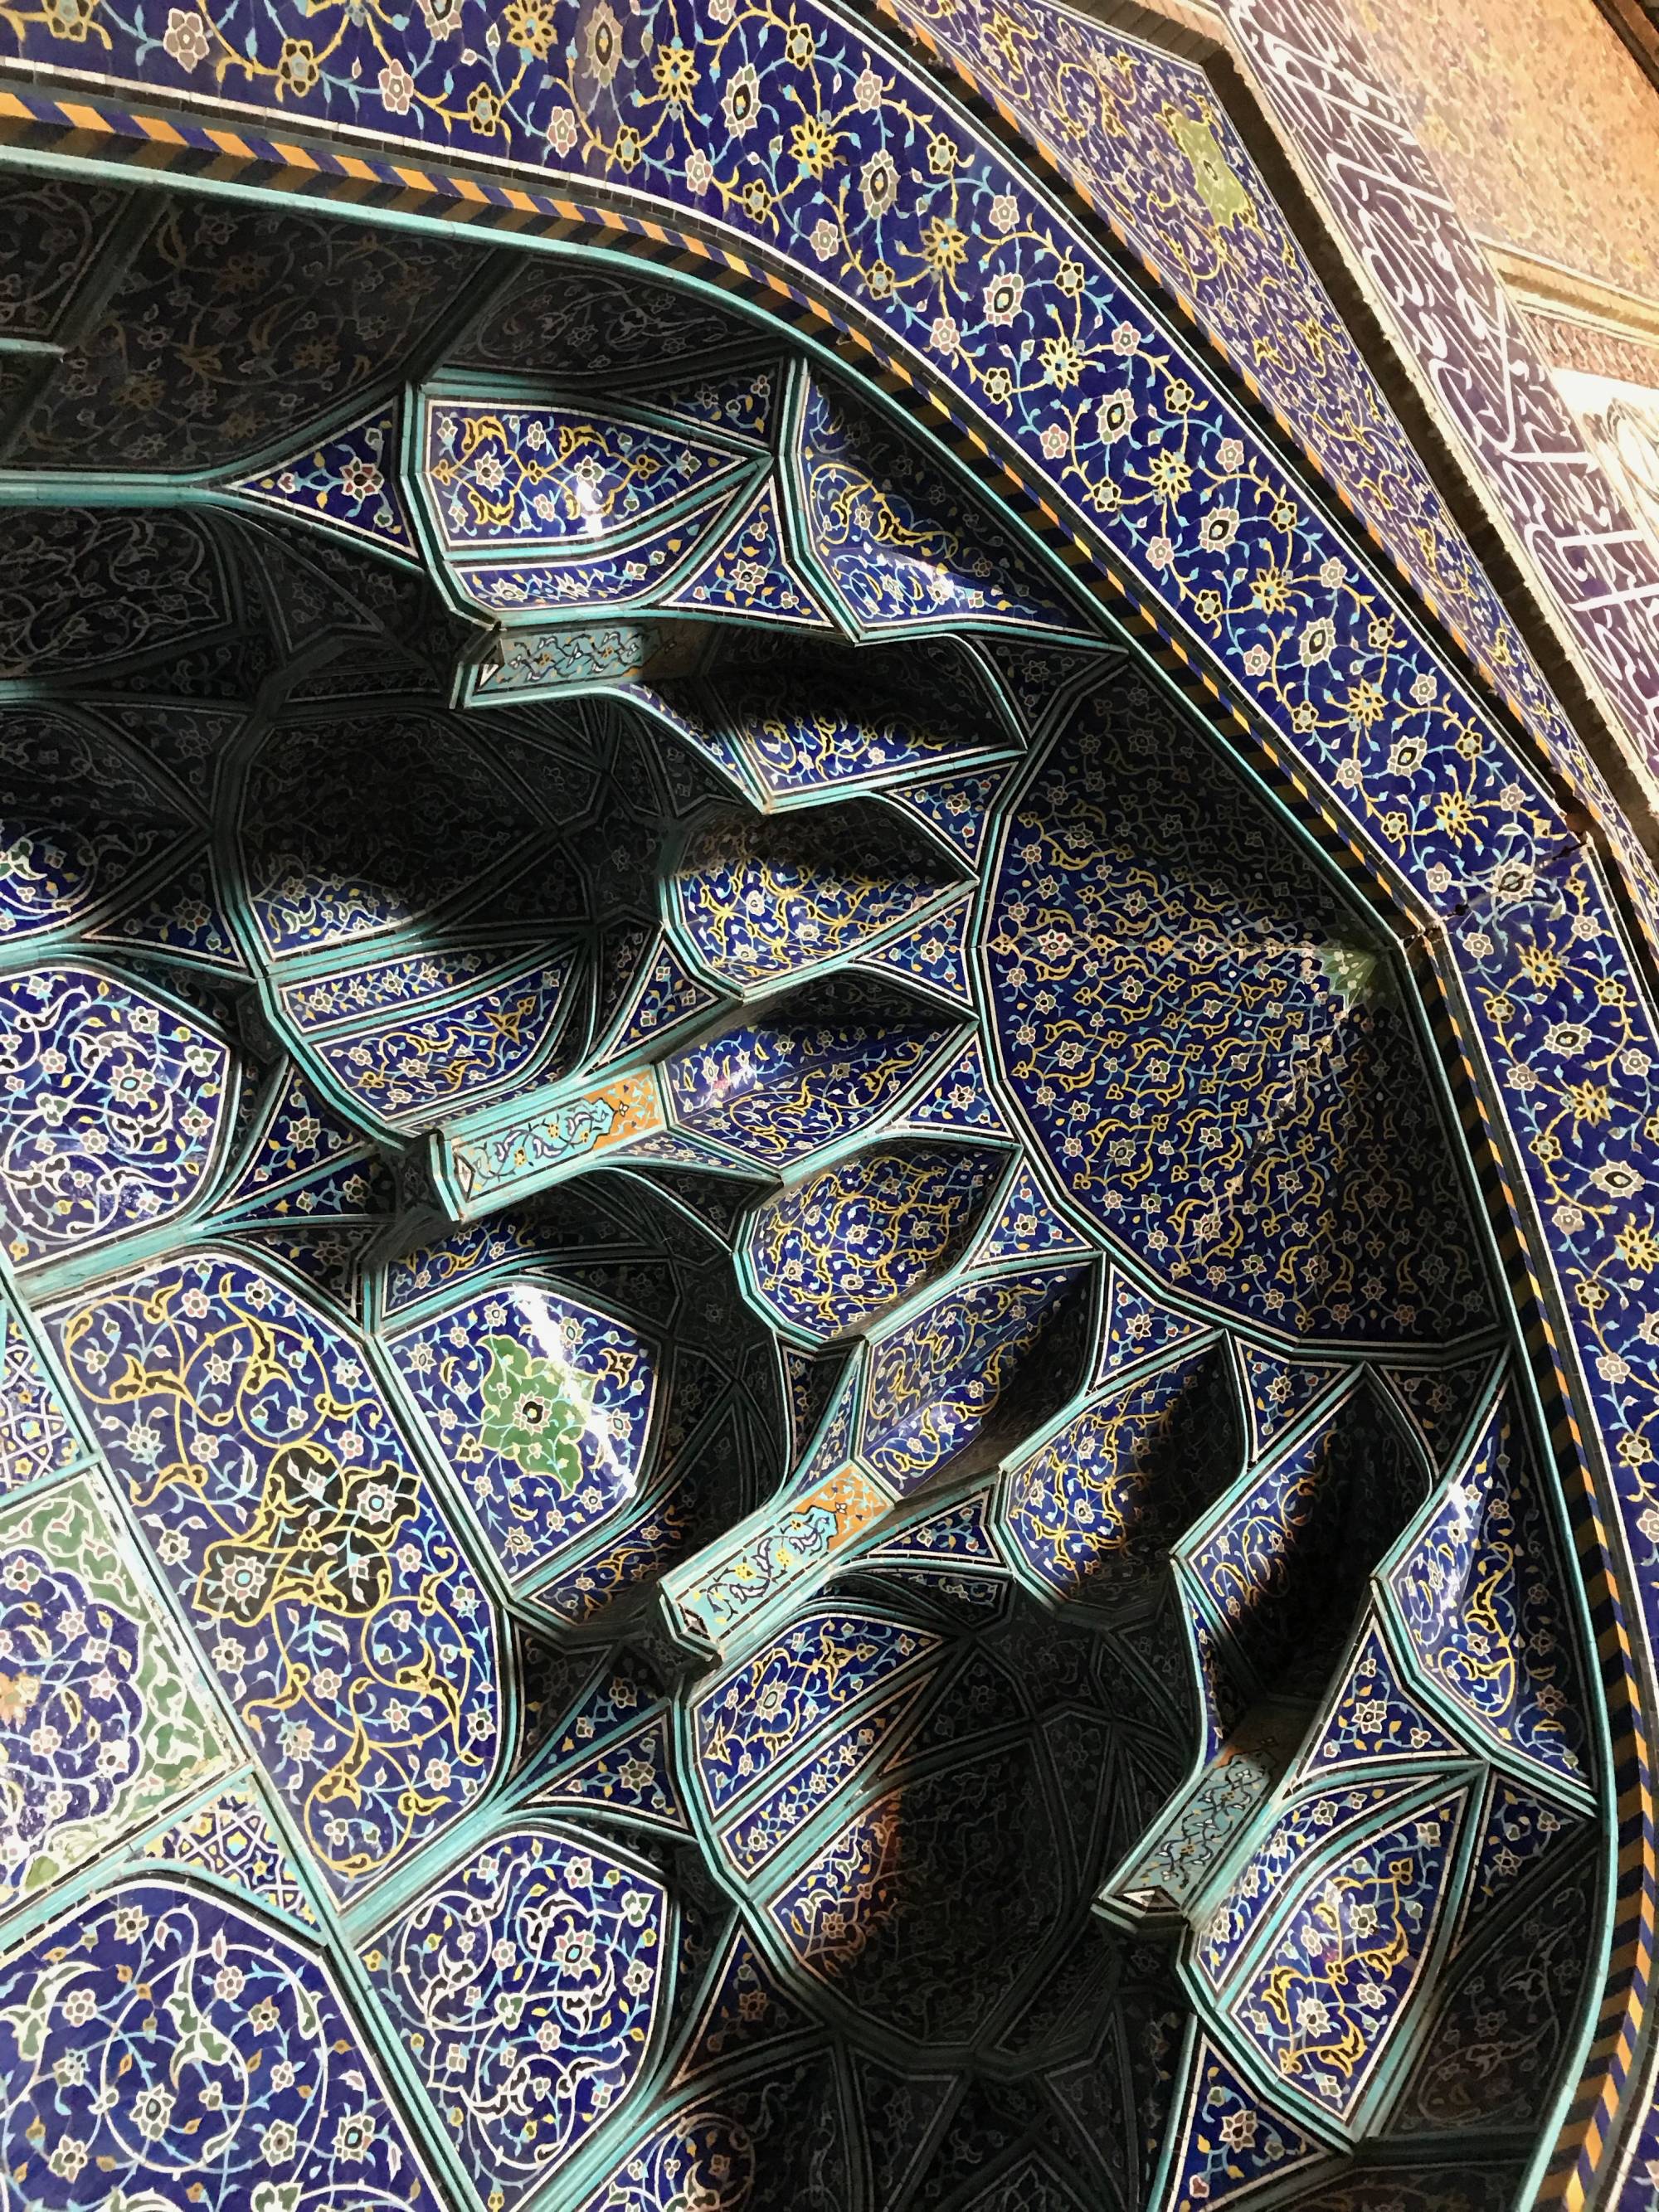 Shah Mosque (مسجد شاه&lrm;), Isfahan